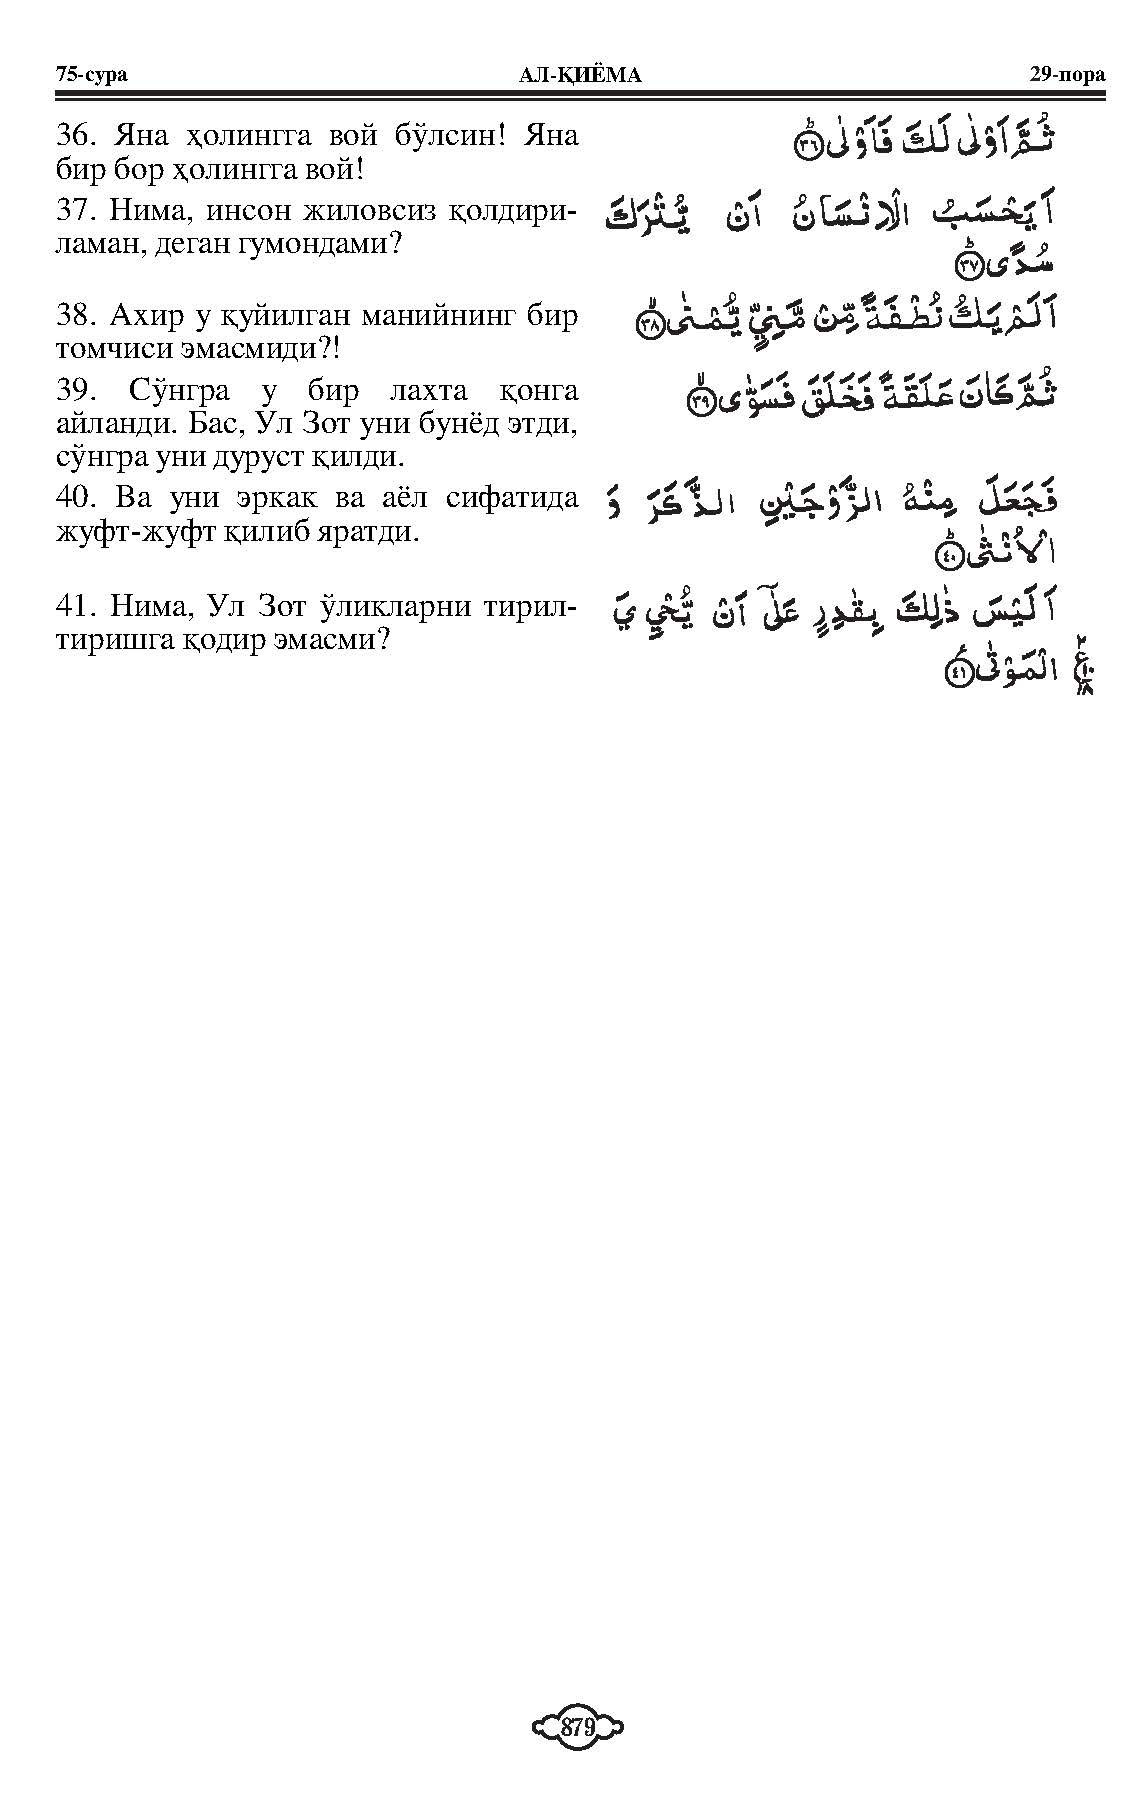 075-al-qiyamah_Page_5